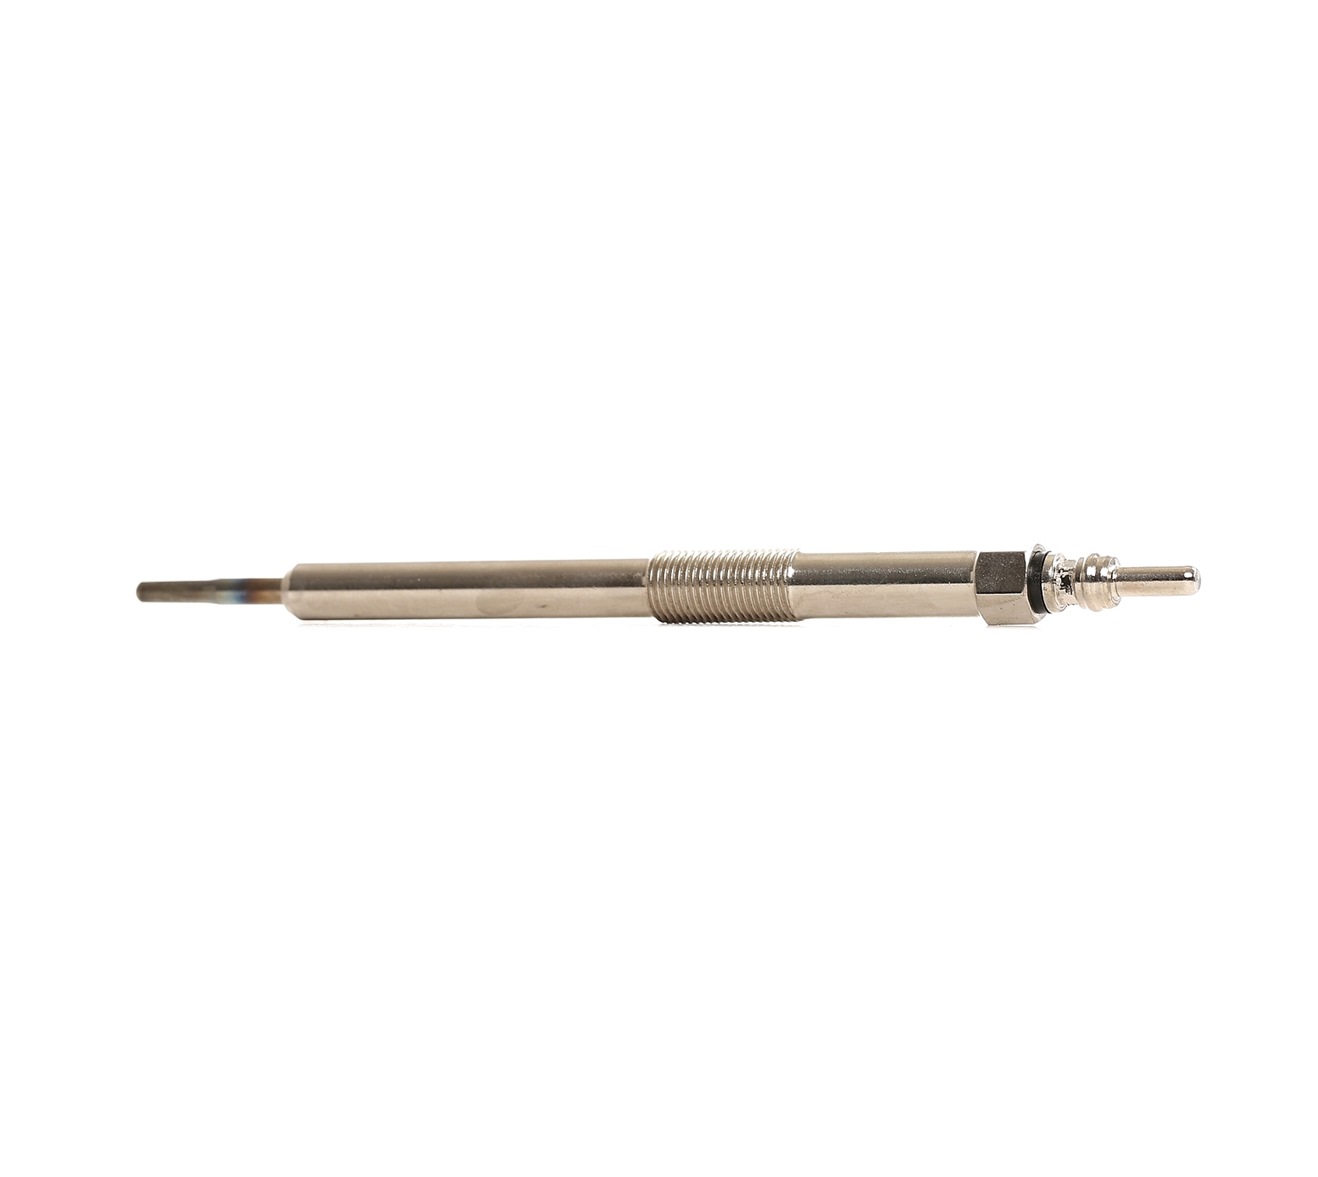 STARK SKGP-1890062 Glow plug 11V M 10 x 1, Pencil-type Glow Plug, after-glow capable, Length: 151 mm, 63